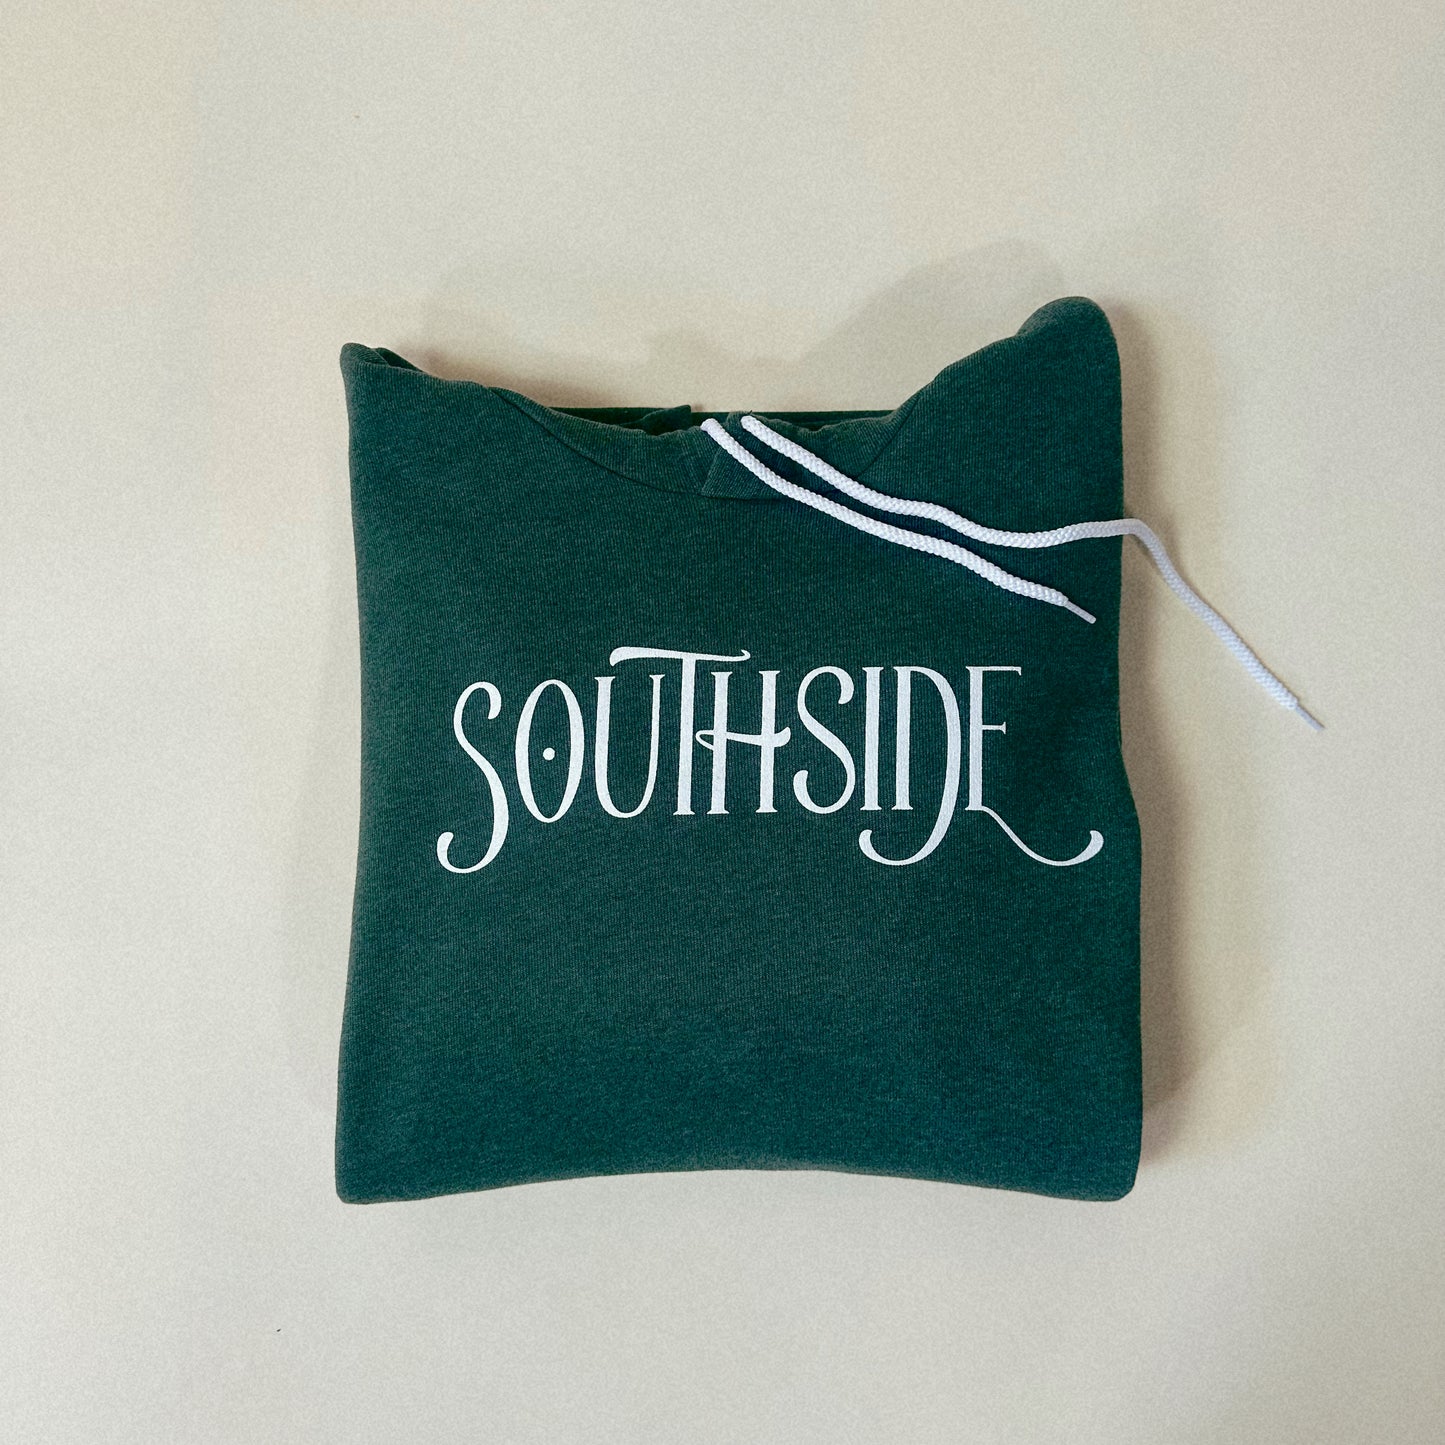 southside hooded sweatshirt